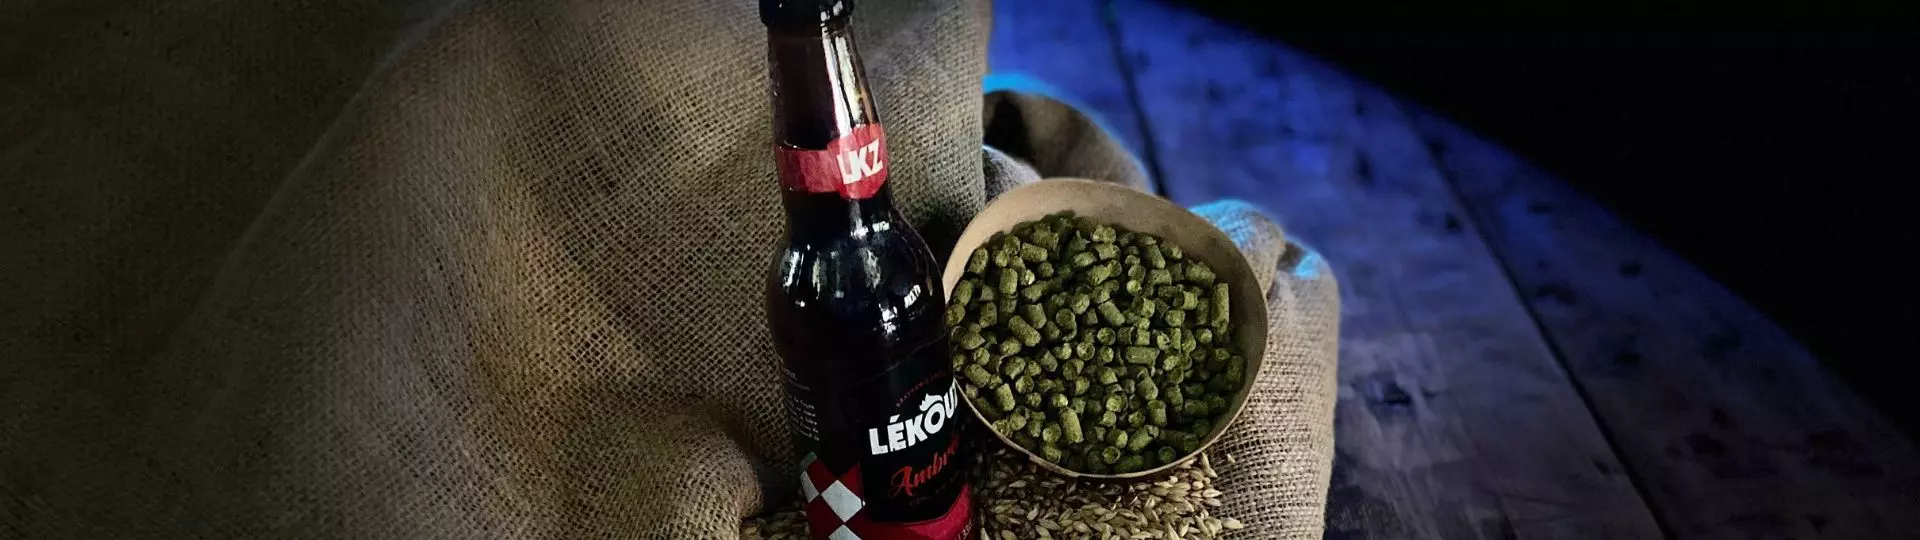 lekouz-brasserie-beer-biere-ambree-mobile